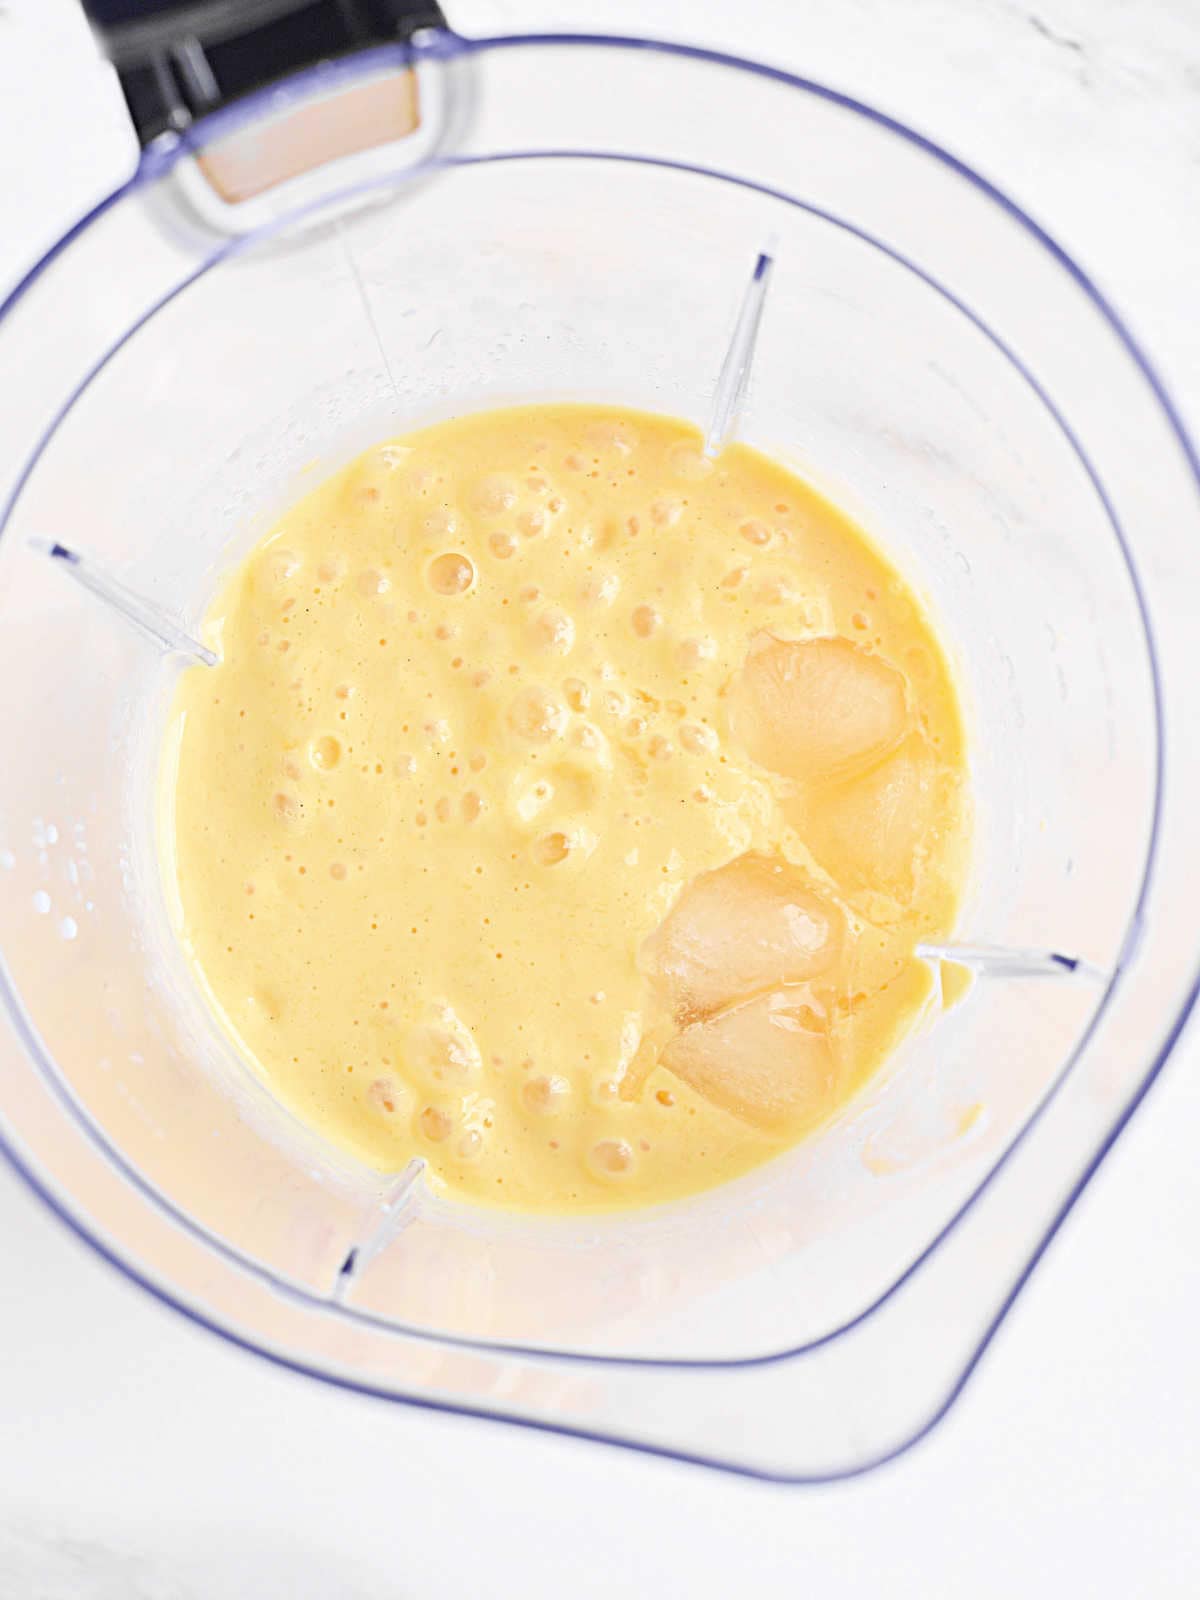 Top view of blender jar with mango milkshake mixture. White surface.